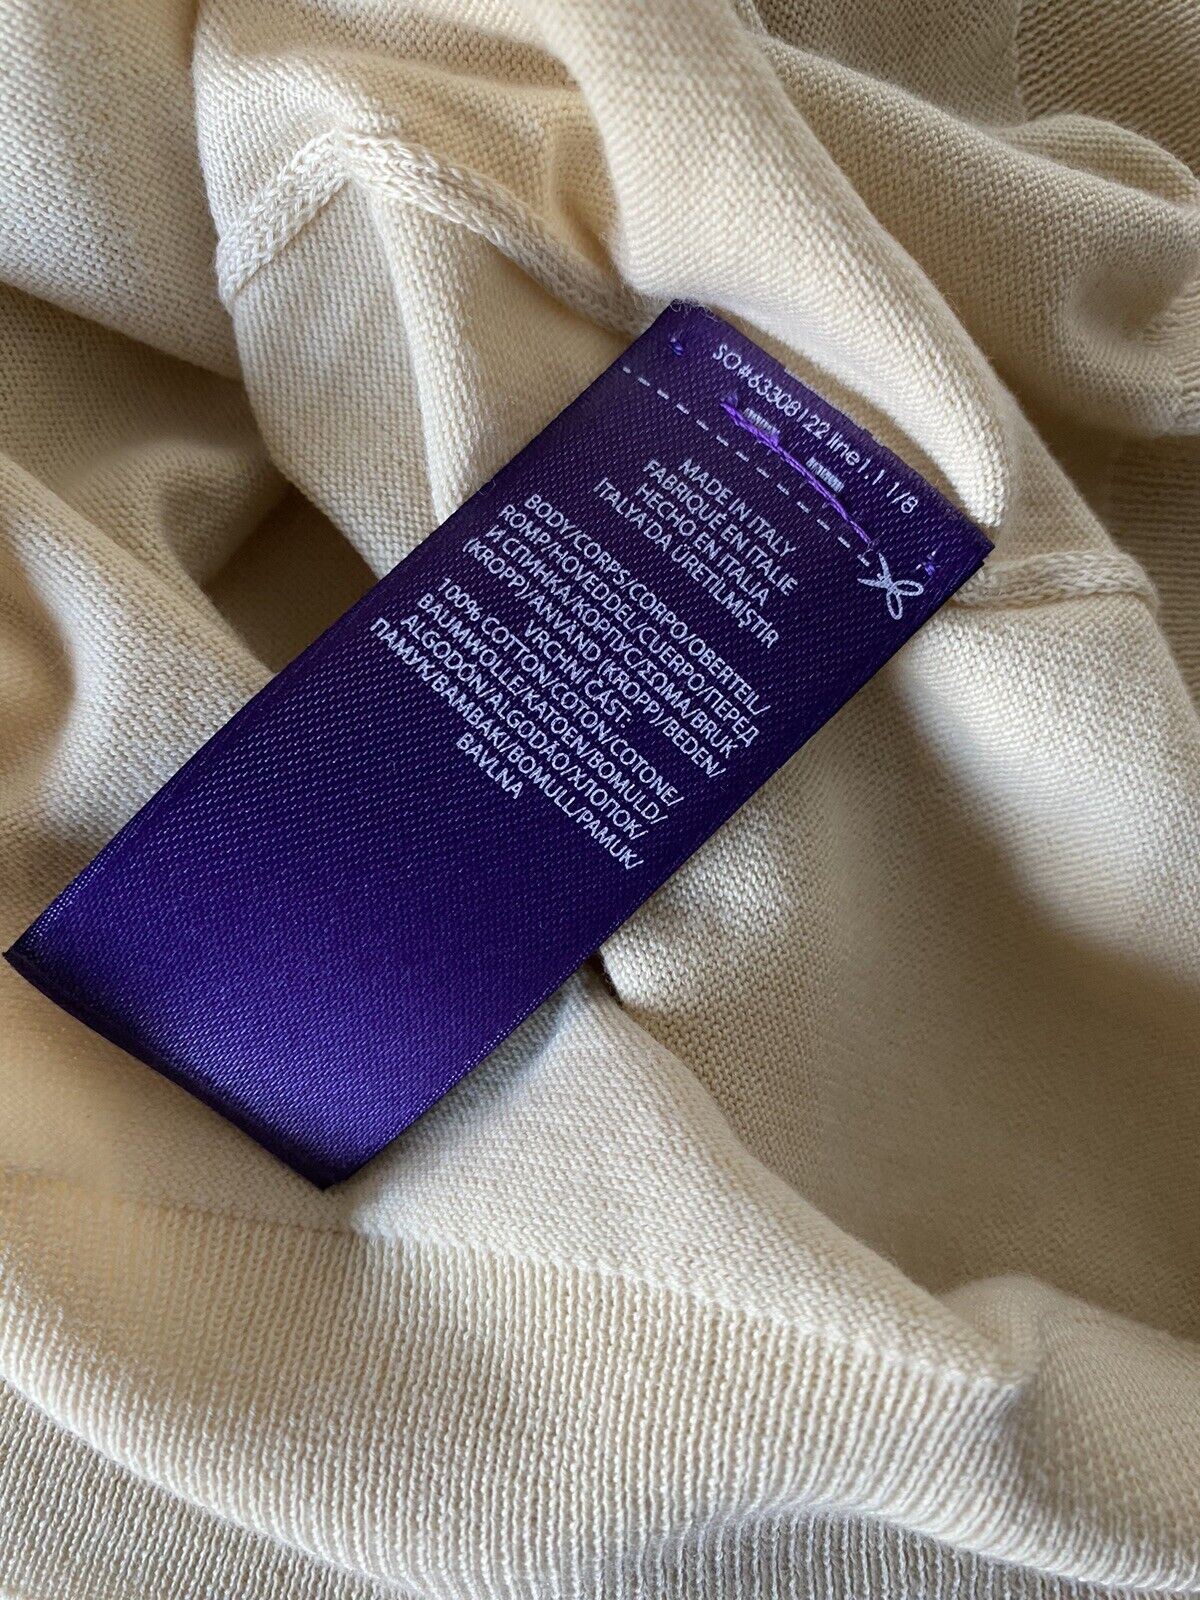 NWT $695 Polo Ralph Lauren Purple Label Men's Cotton Winter Cream Sweater L IT